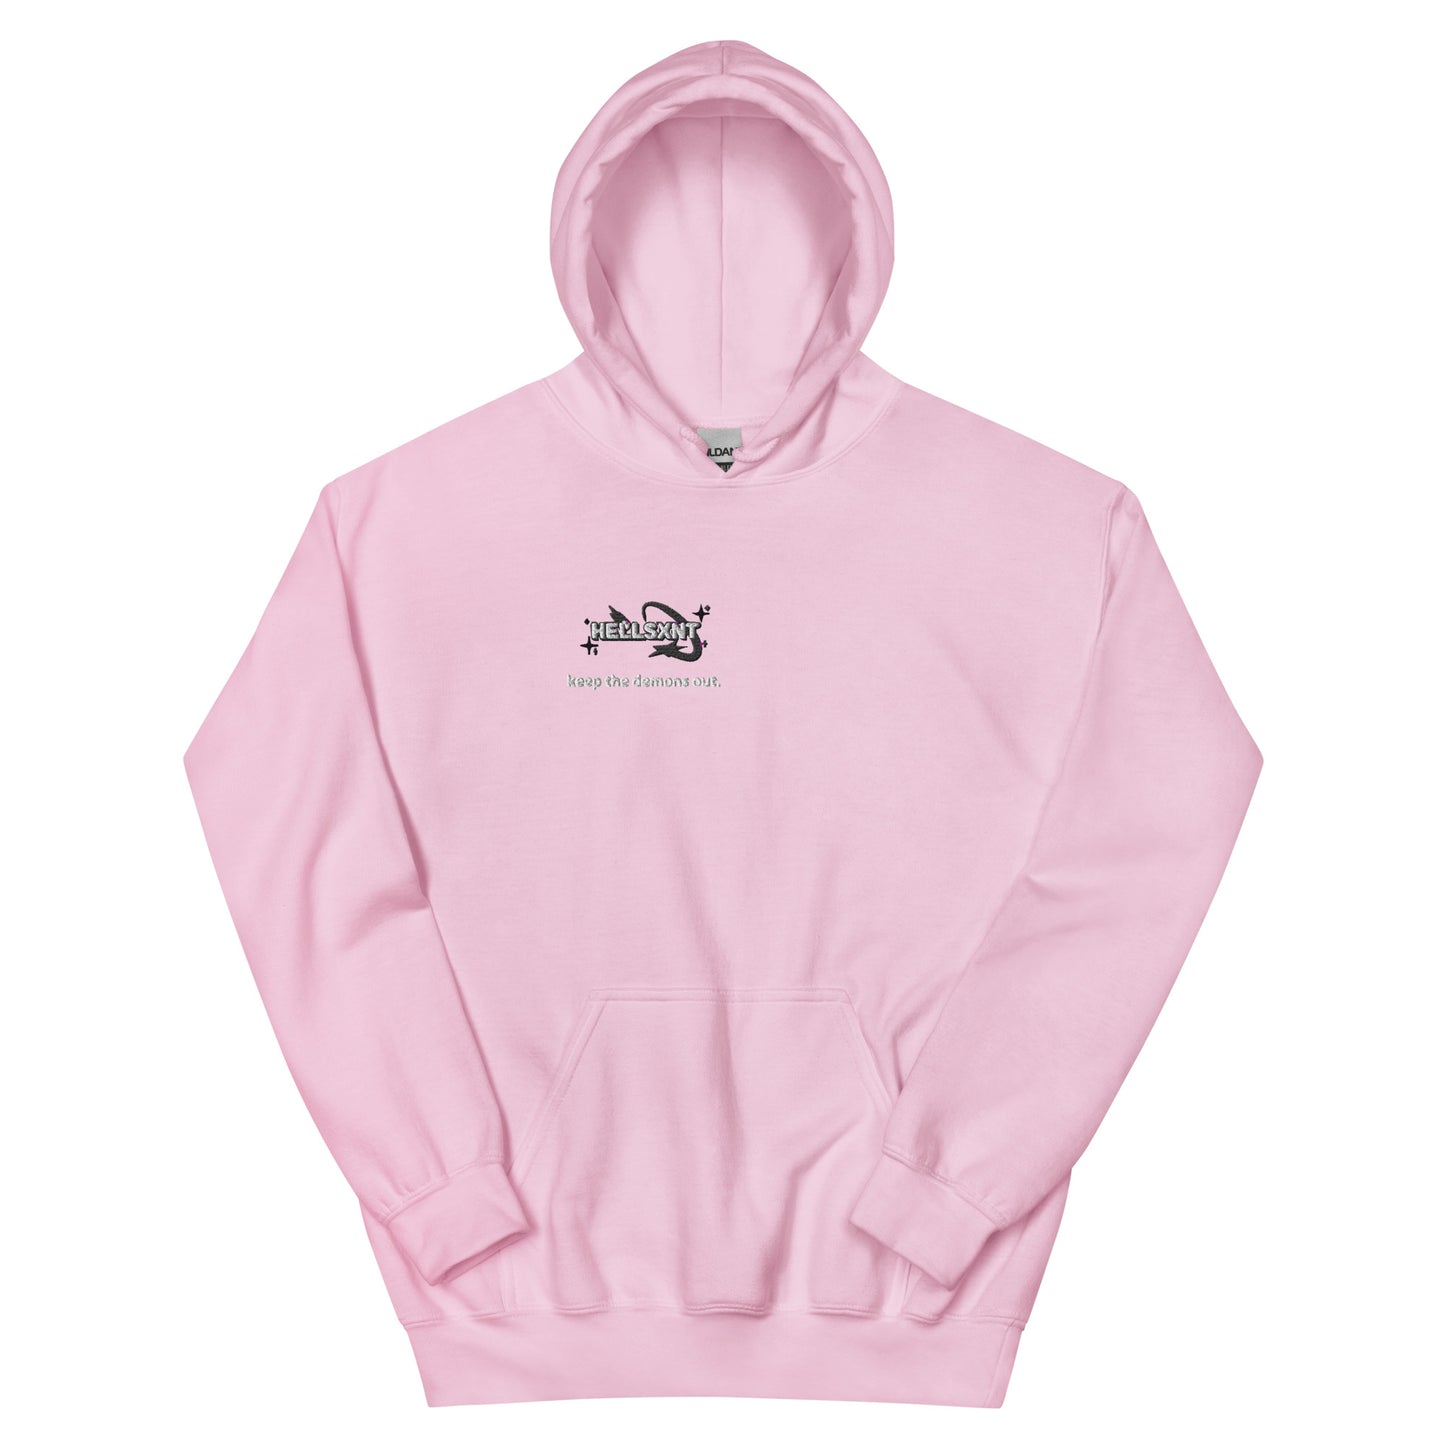 Smpl Hellsxnt Logo unisex hoodie